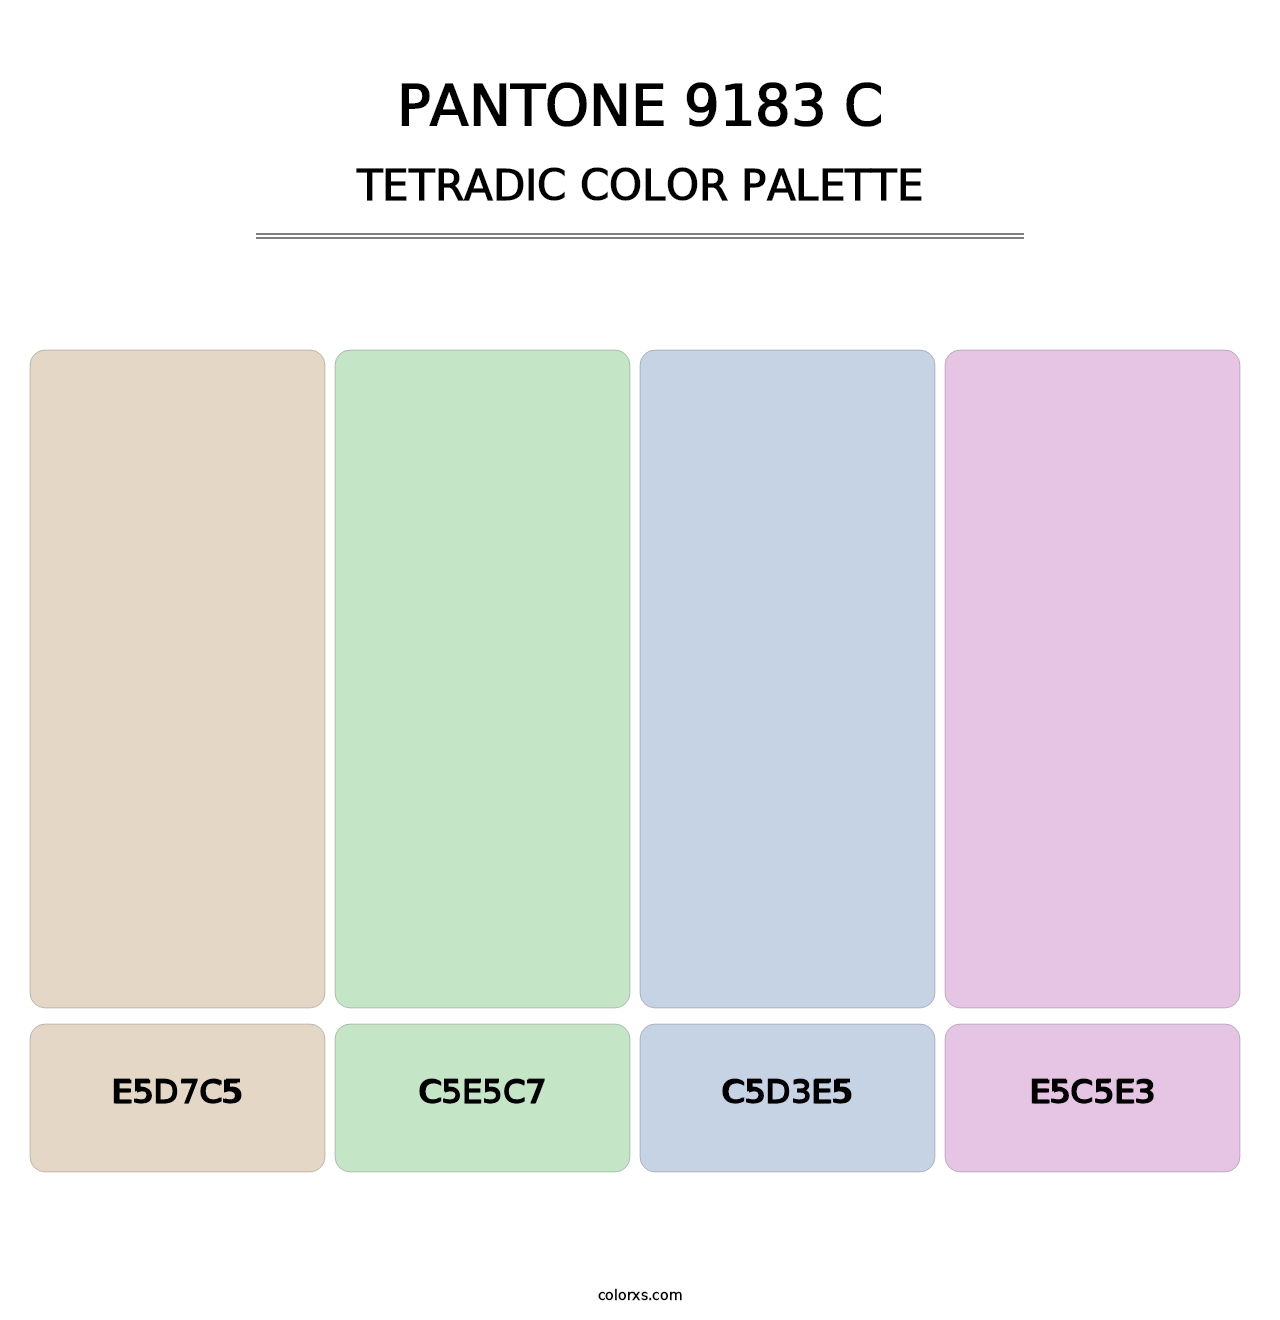 PANTONE 9183 C - Tetradic Color Palette